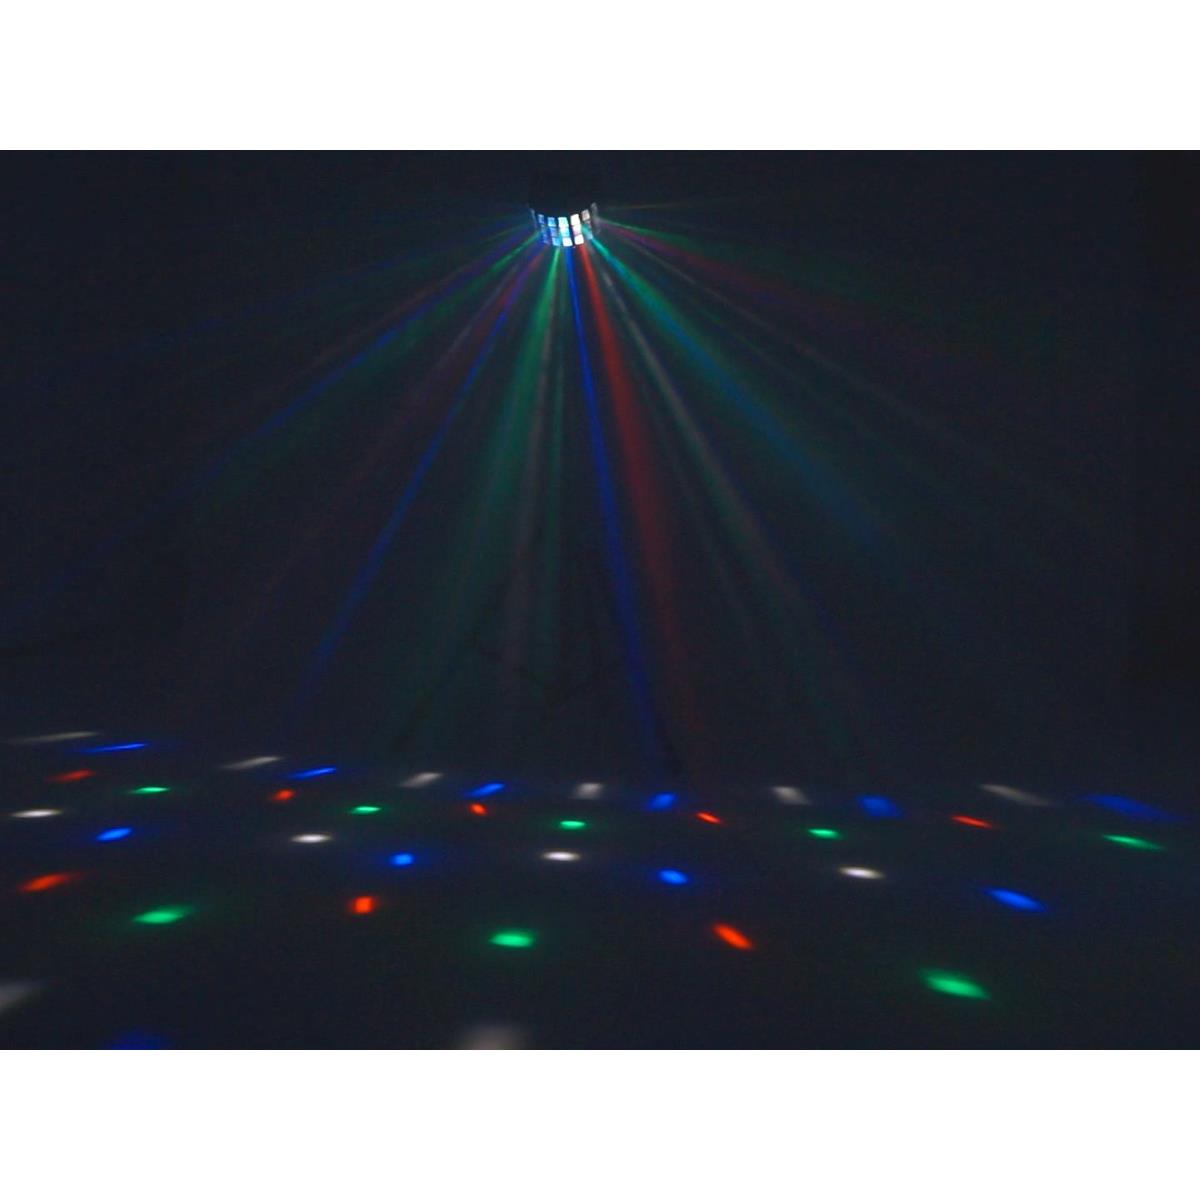 LED Strahleneffekt - kompakt und "party-ready" - 5 Farben, musikgesteuerte Beamshow